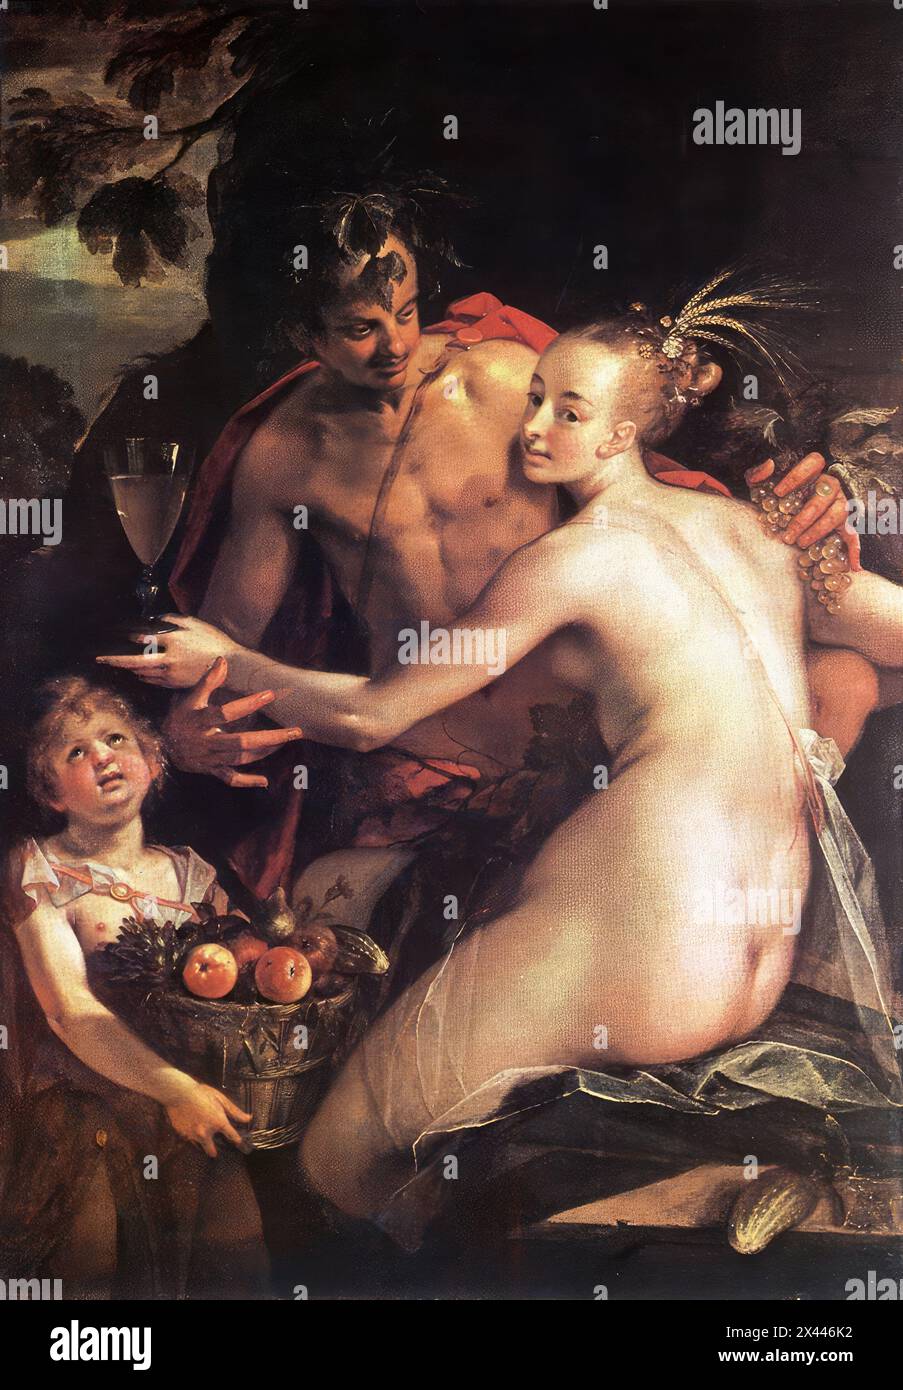 AACHEN, Hans von (b. 1552, Köln, d. 1615, Praha)    Bacchus, Ceres and Cupid  -  Oil on canvas, 163 x 113 cm  Kunsthistorisches Museum, Vienna              --- Keywords: --------------    Author: AACHEN, Hans von  Title: Bacchus, Ceres and Cupid  Time-line: 1601-1650  School: German  Form: painting  Type: mythological Stock Photo